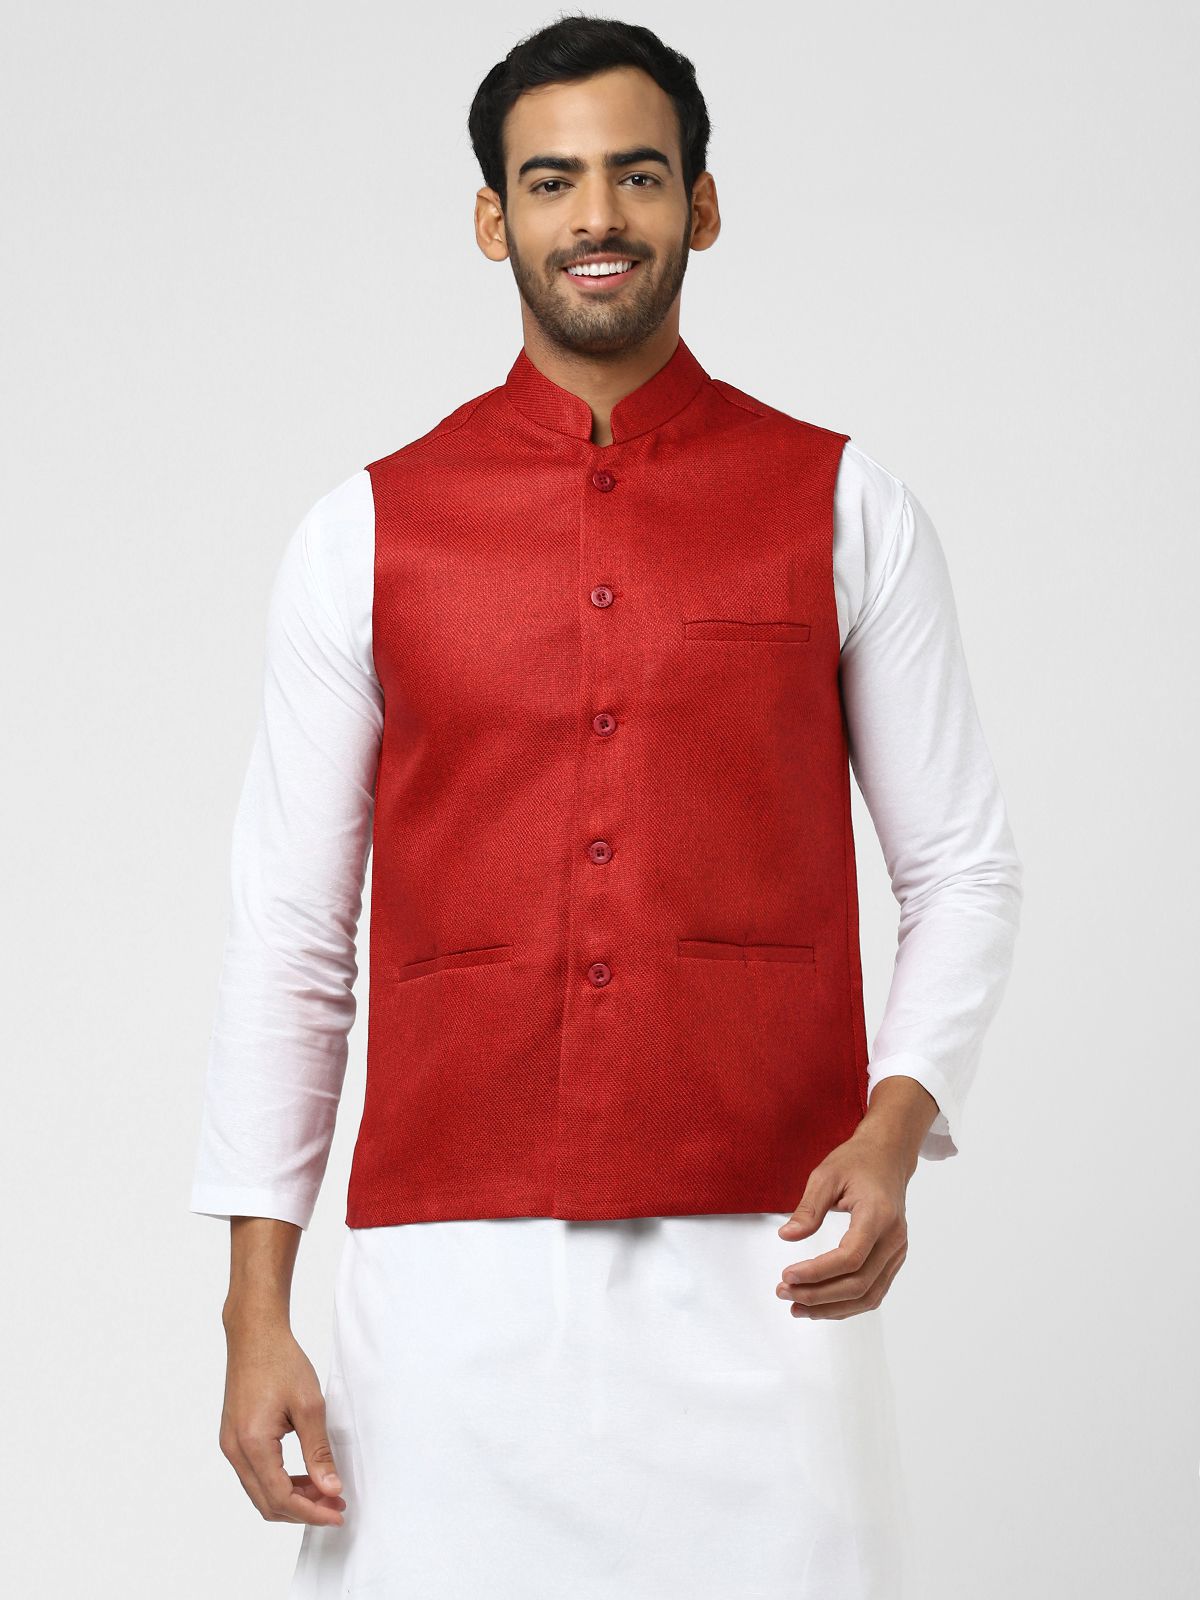     			DESHBANDHU DBK Red Jute Nehru Jacket Single Pack